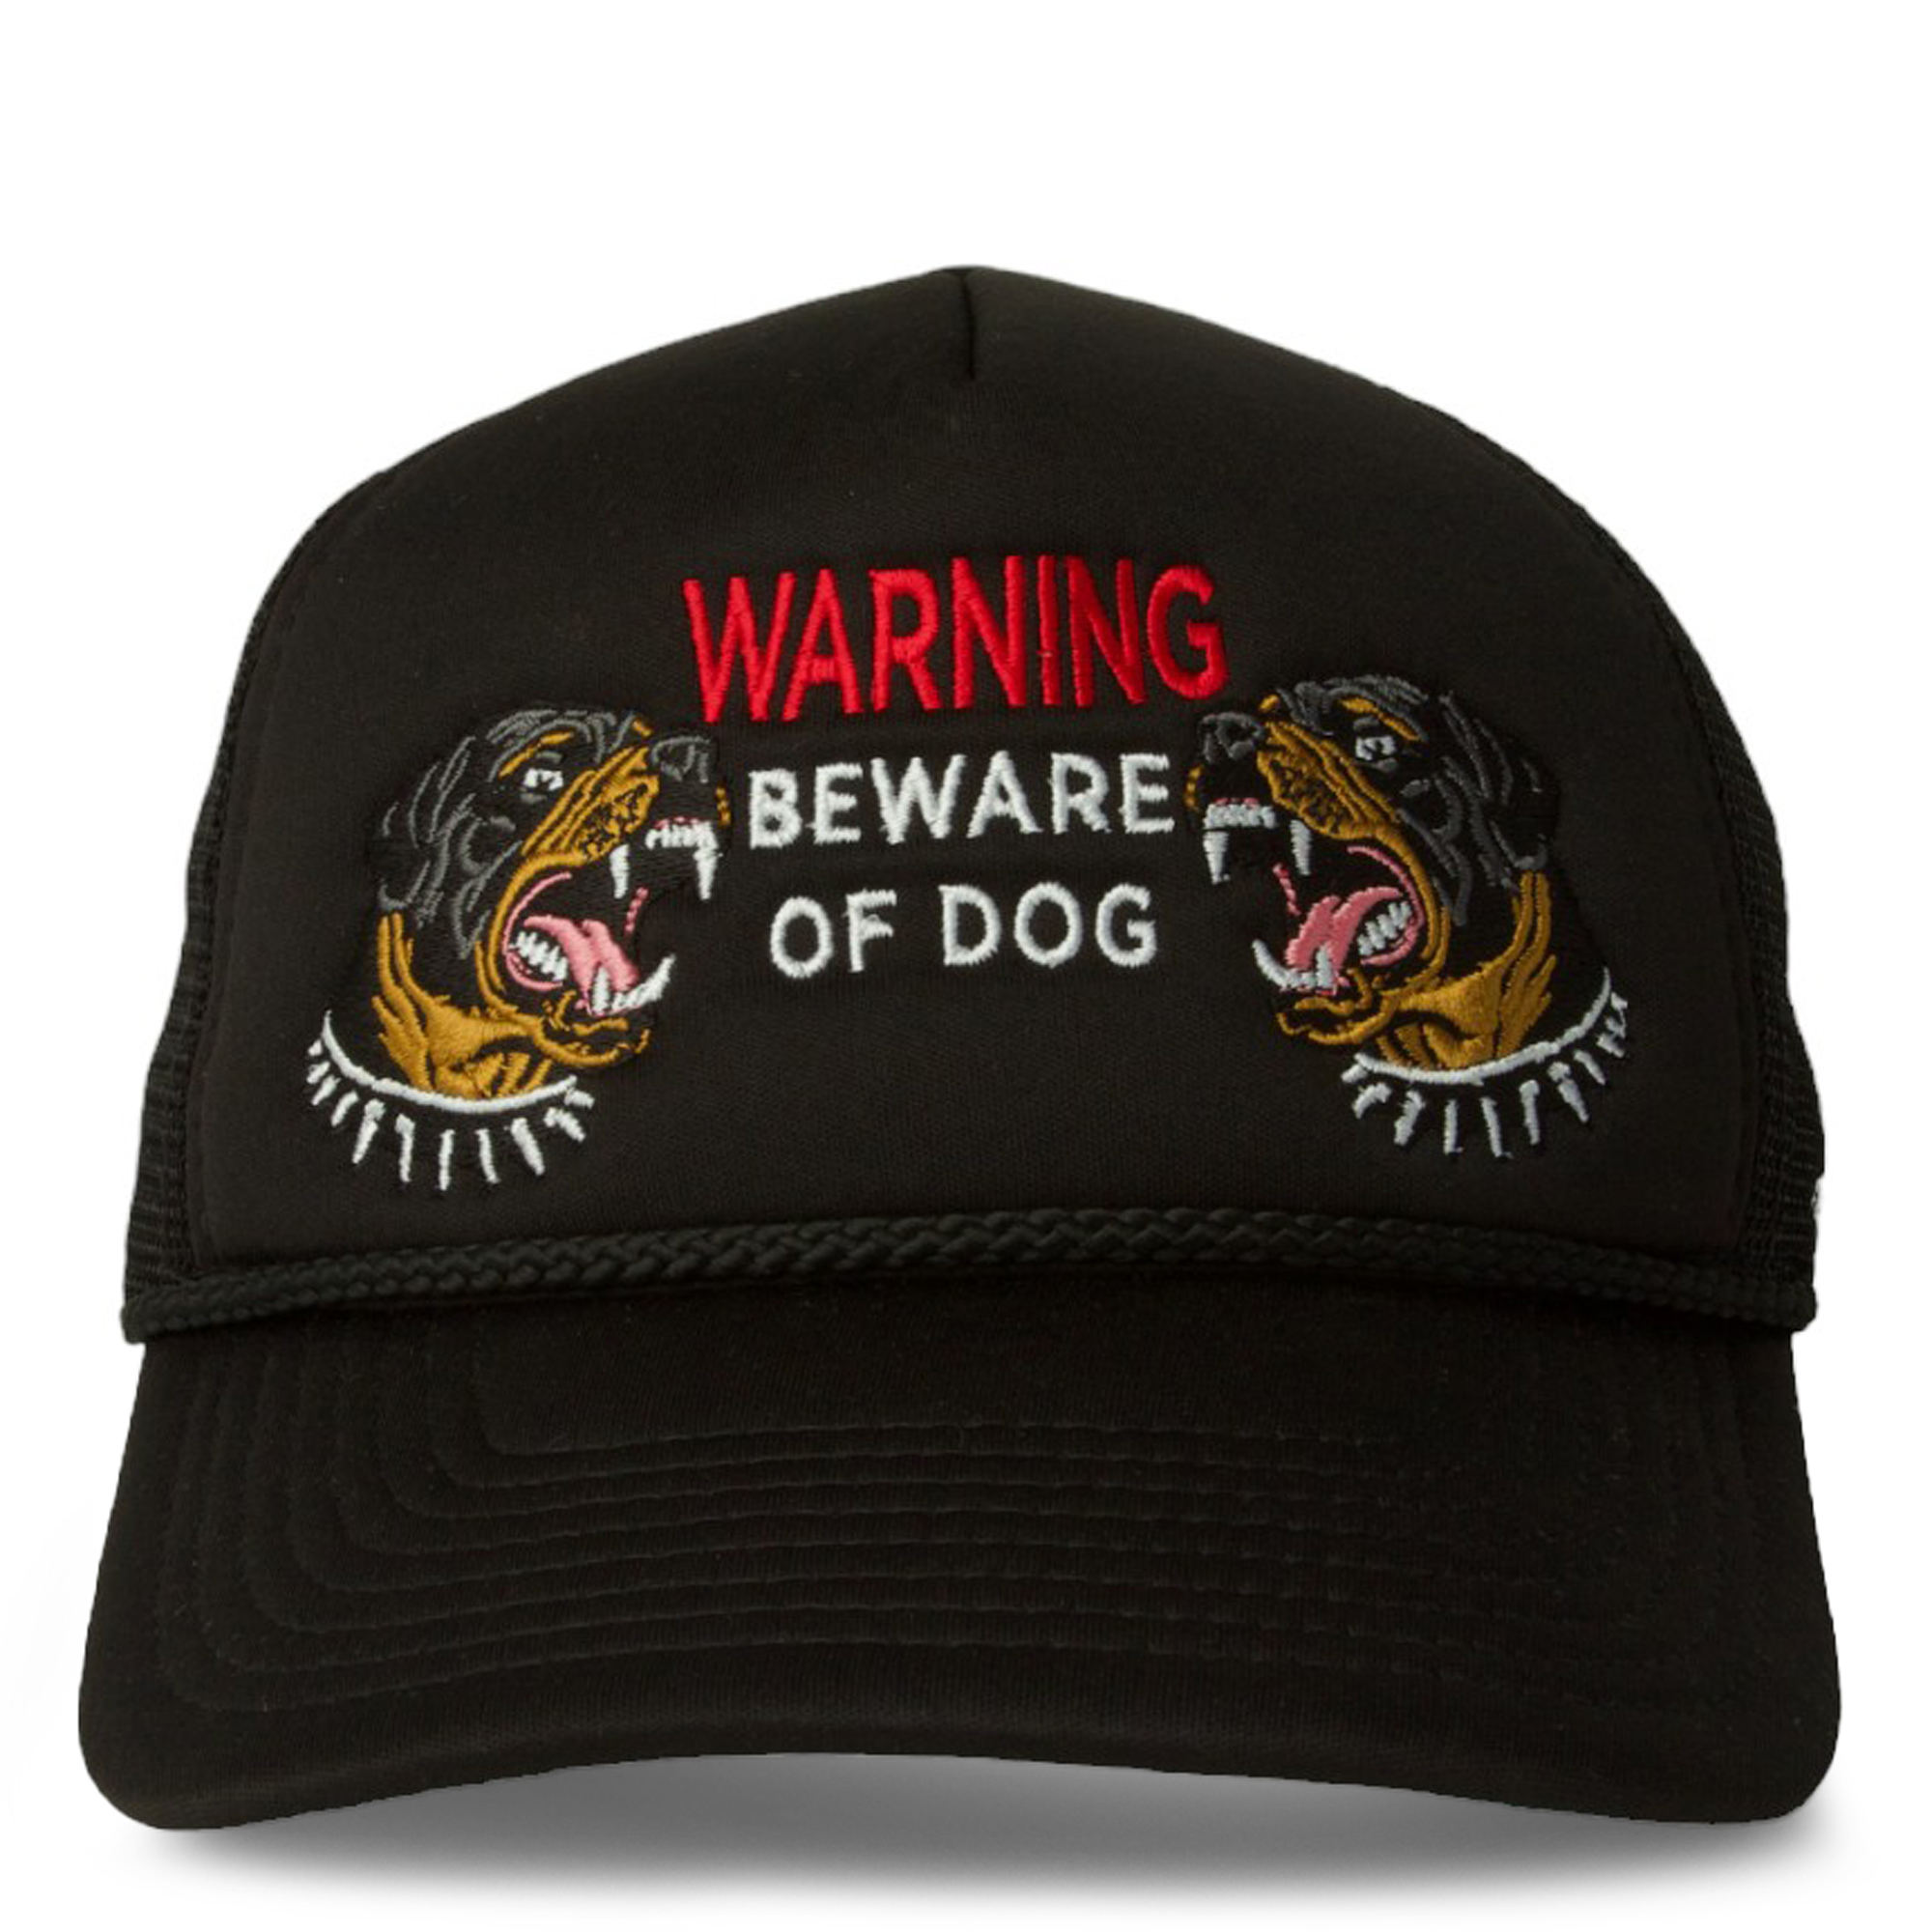 BEWARE OF DOG TRUCKER HAT 1004692